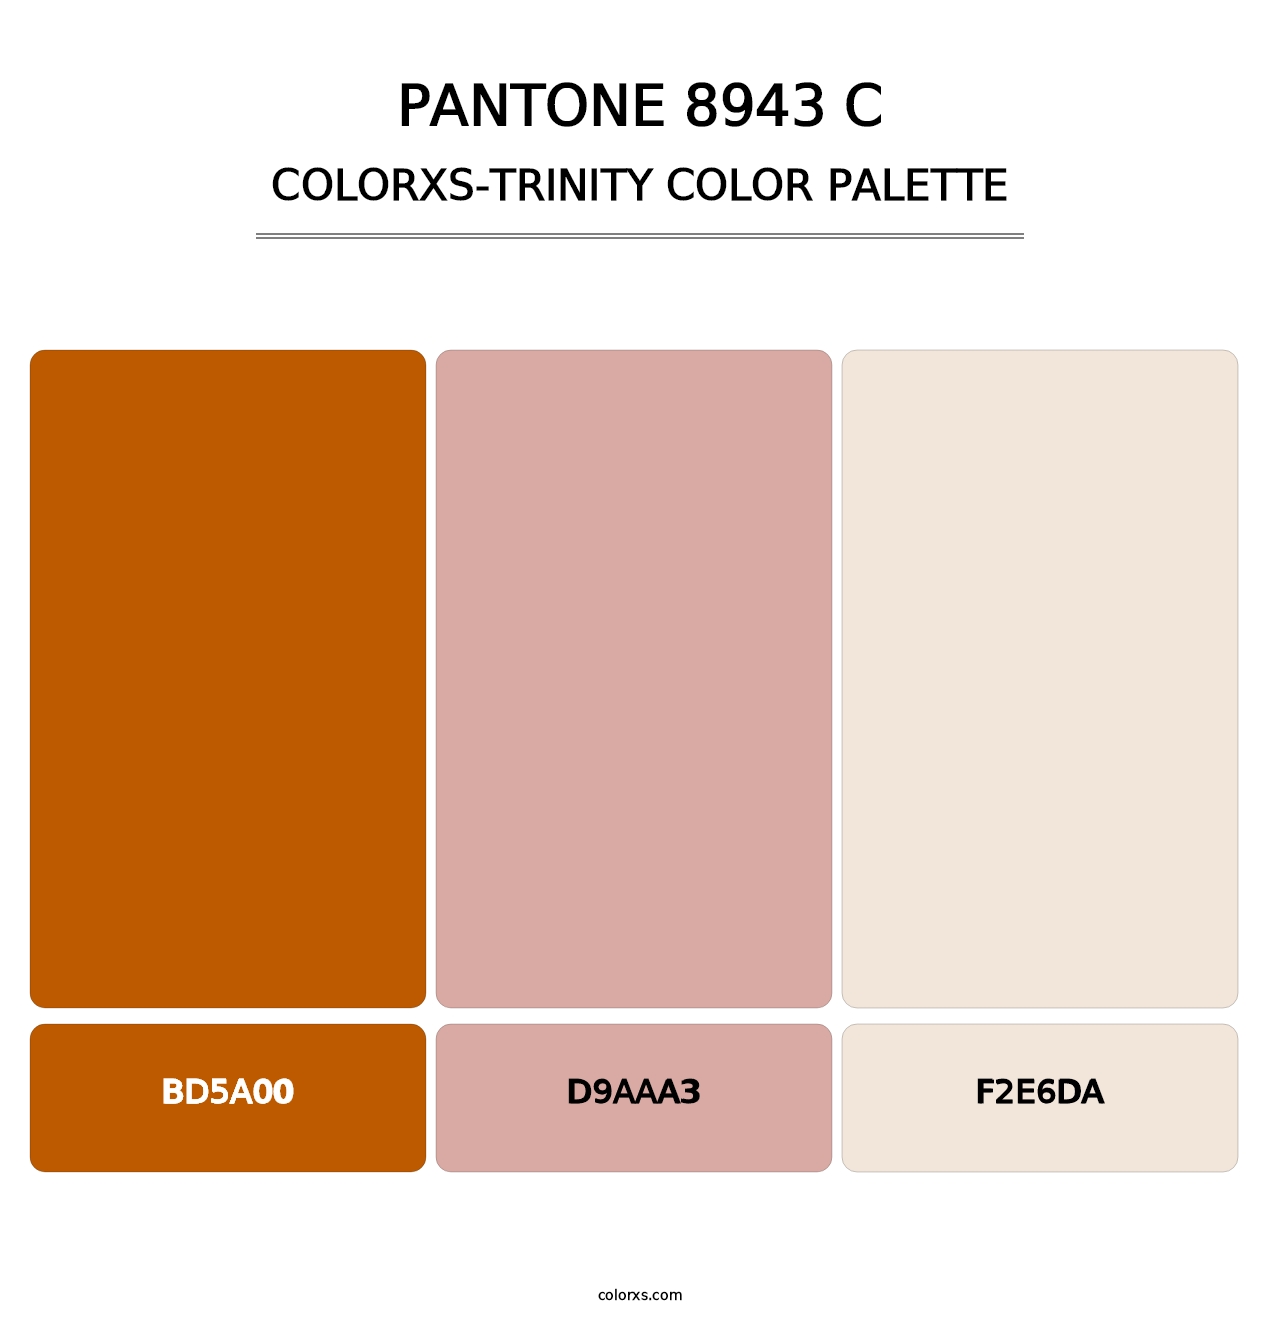 PANTONE 8943 C - Colorxs Trinity Palette